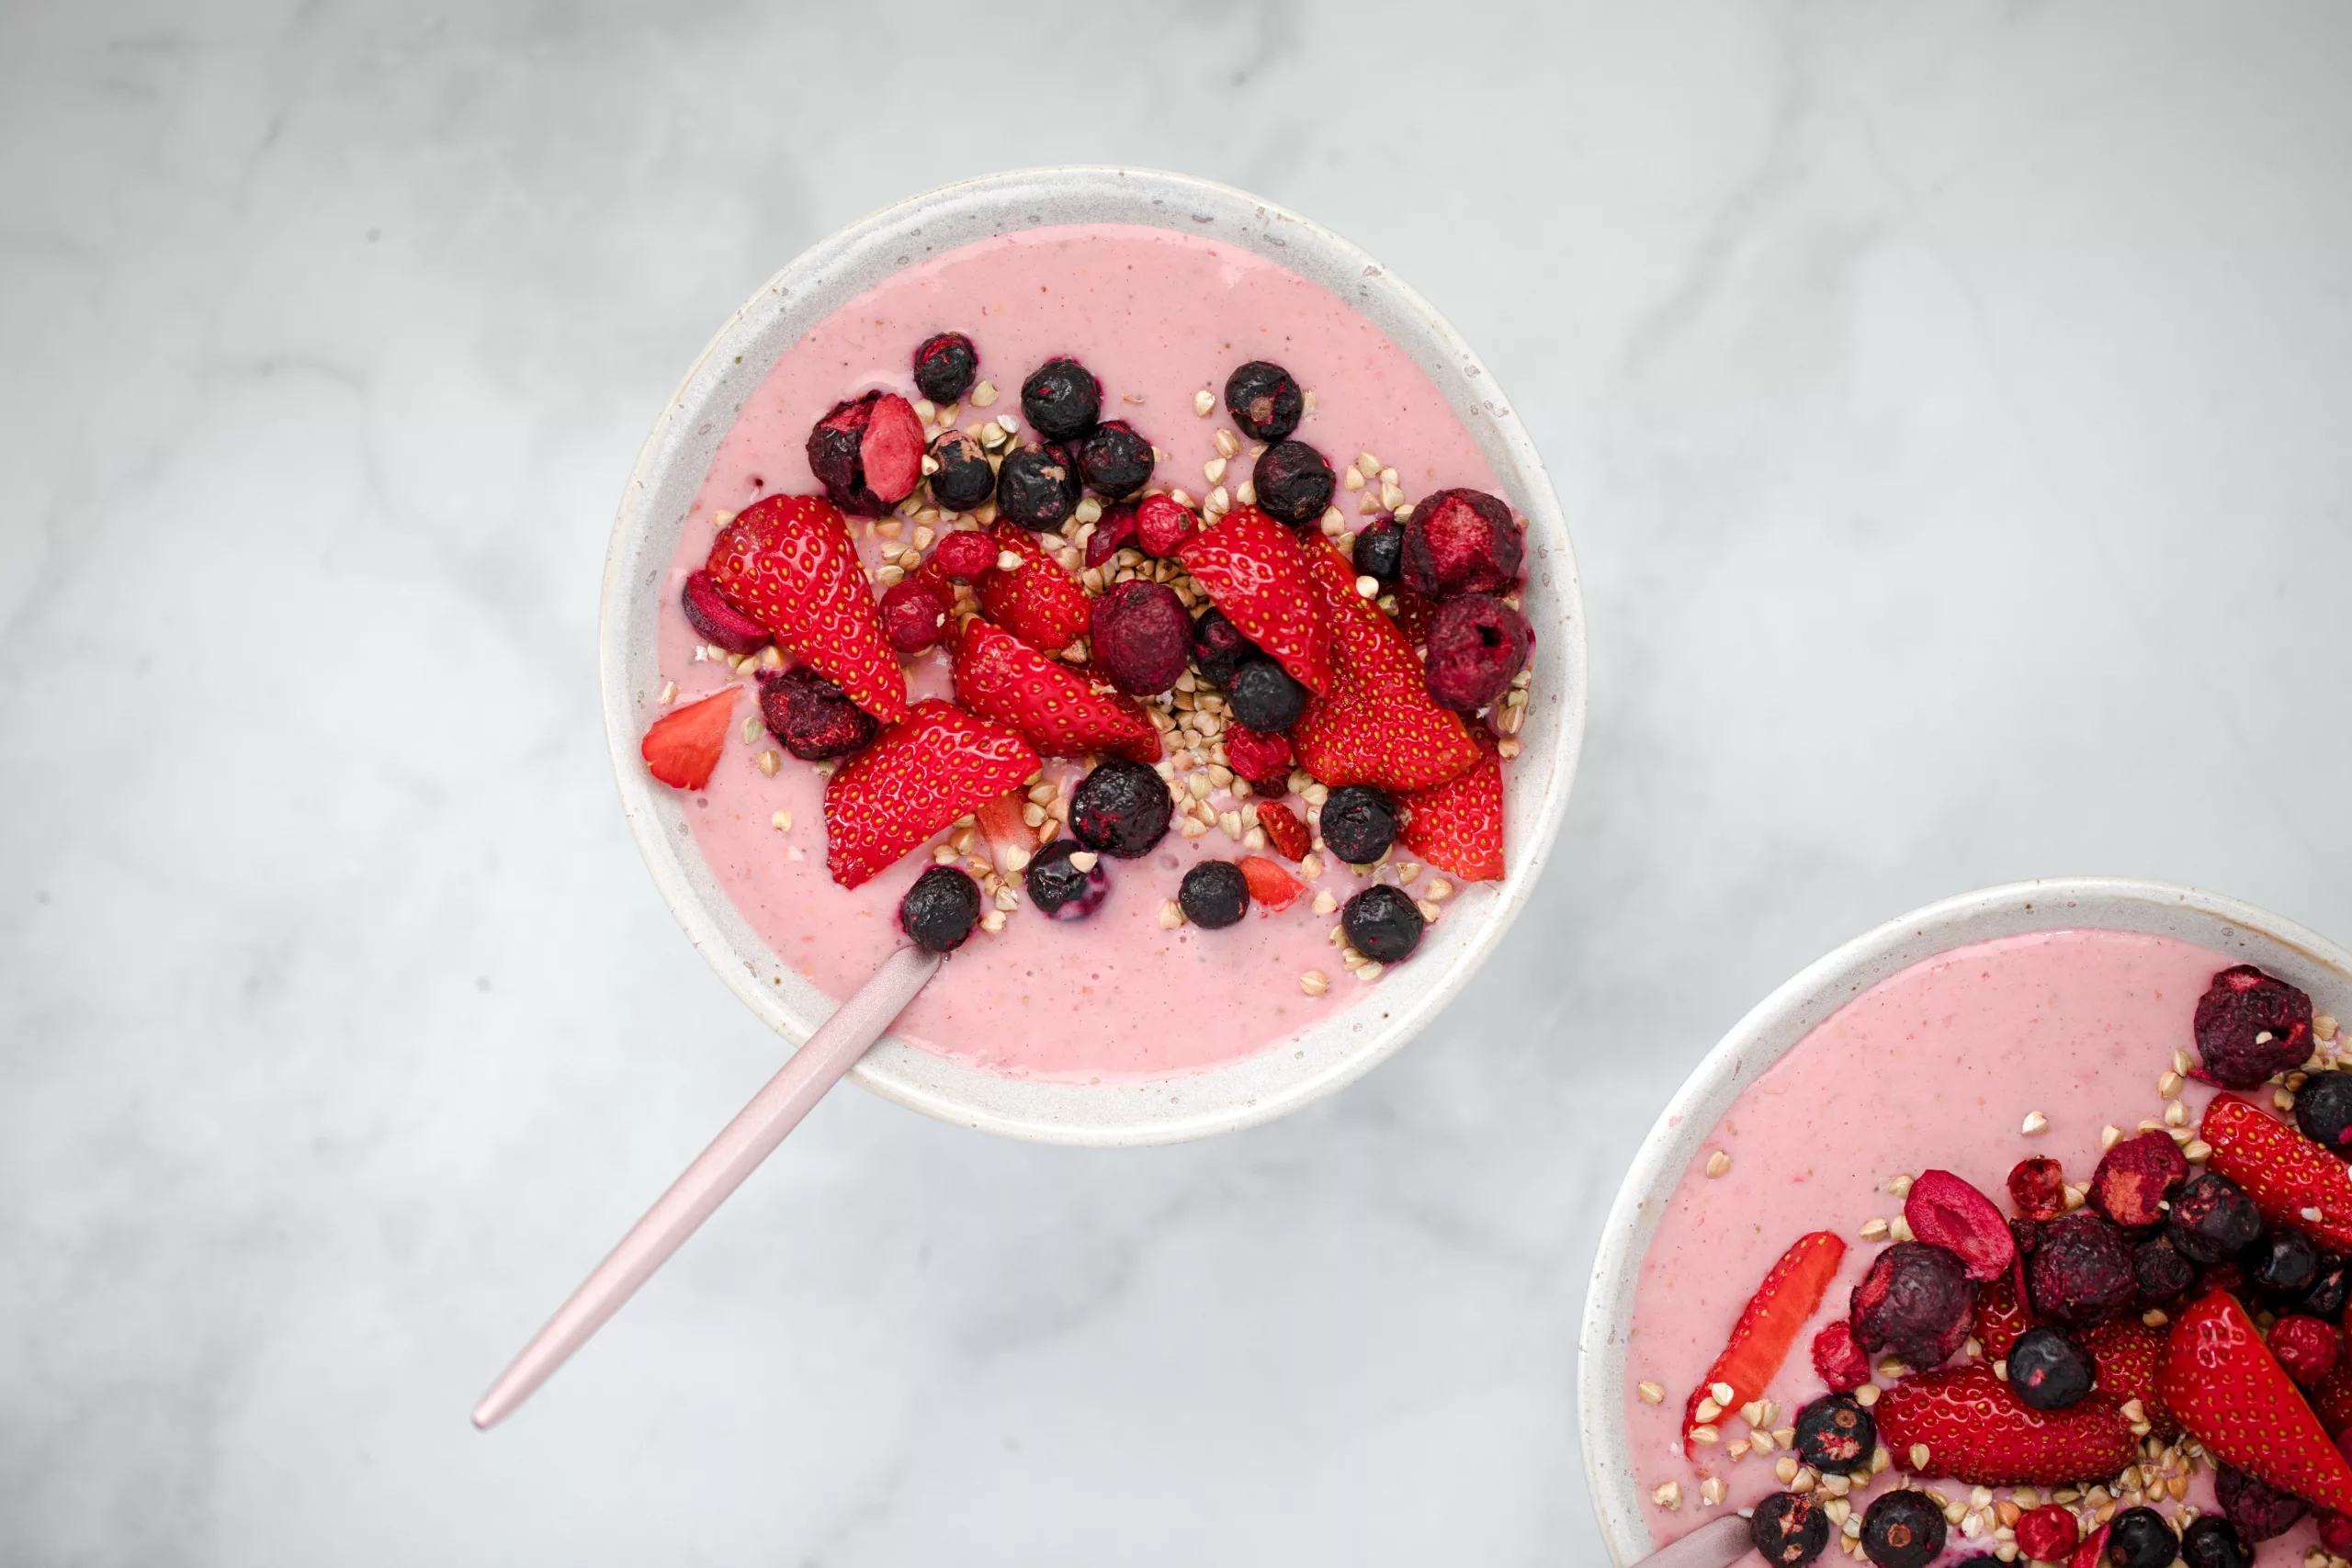 Yogurt and strawberries are a good source of vitamin B12